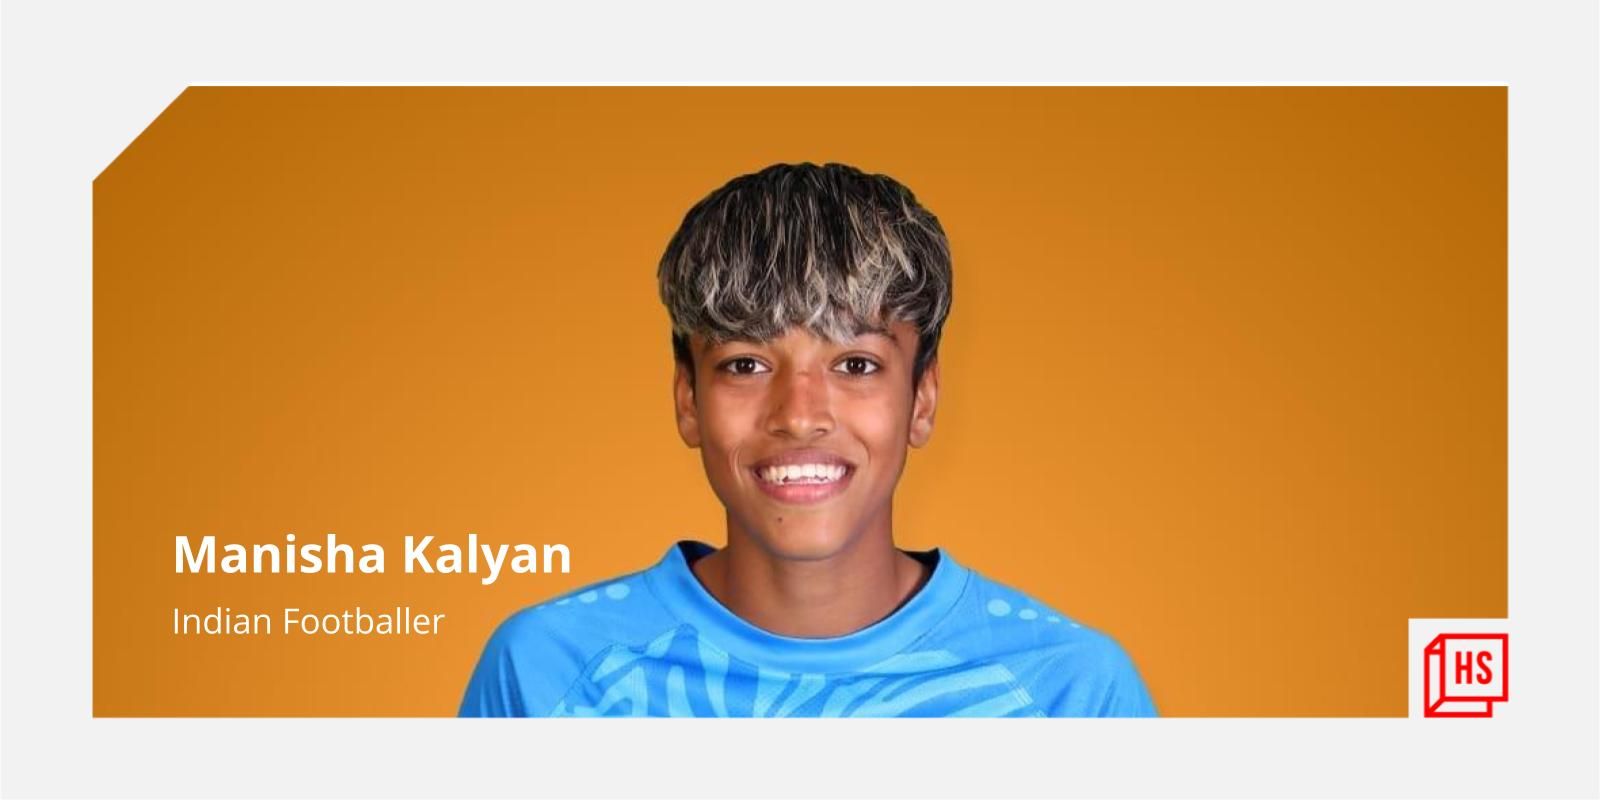 Travelled 15 km on foot to play football: 20-year-old Indian midfielder Manisha Kalyan
